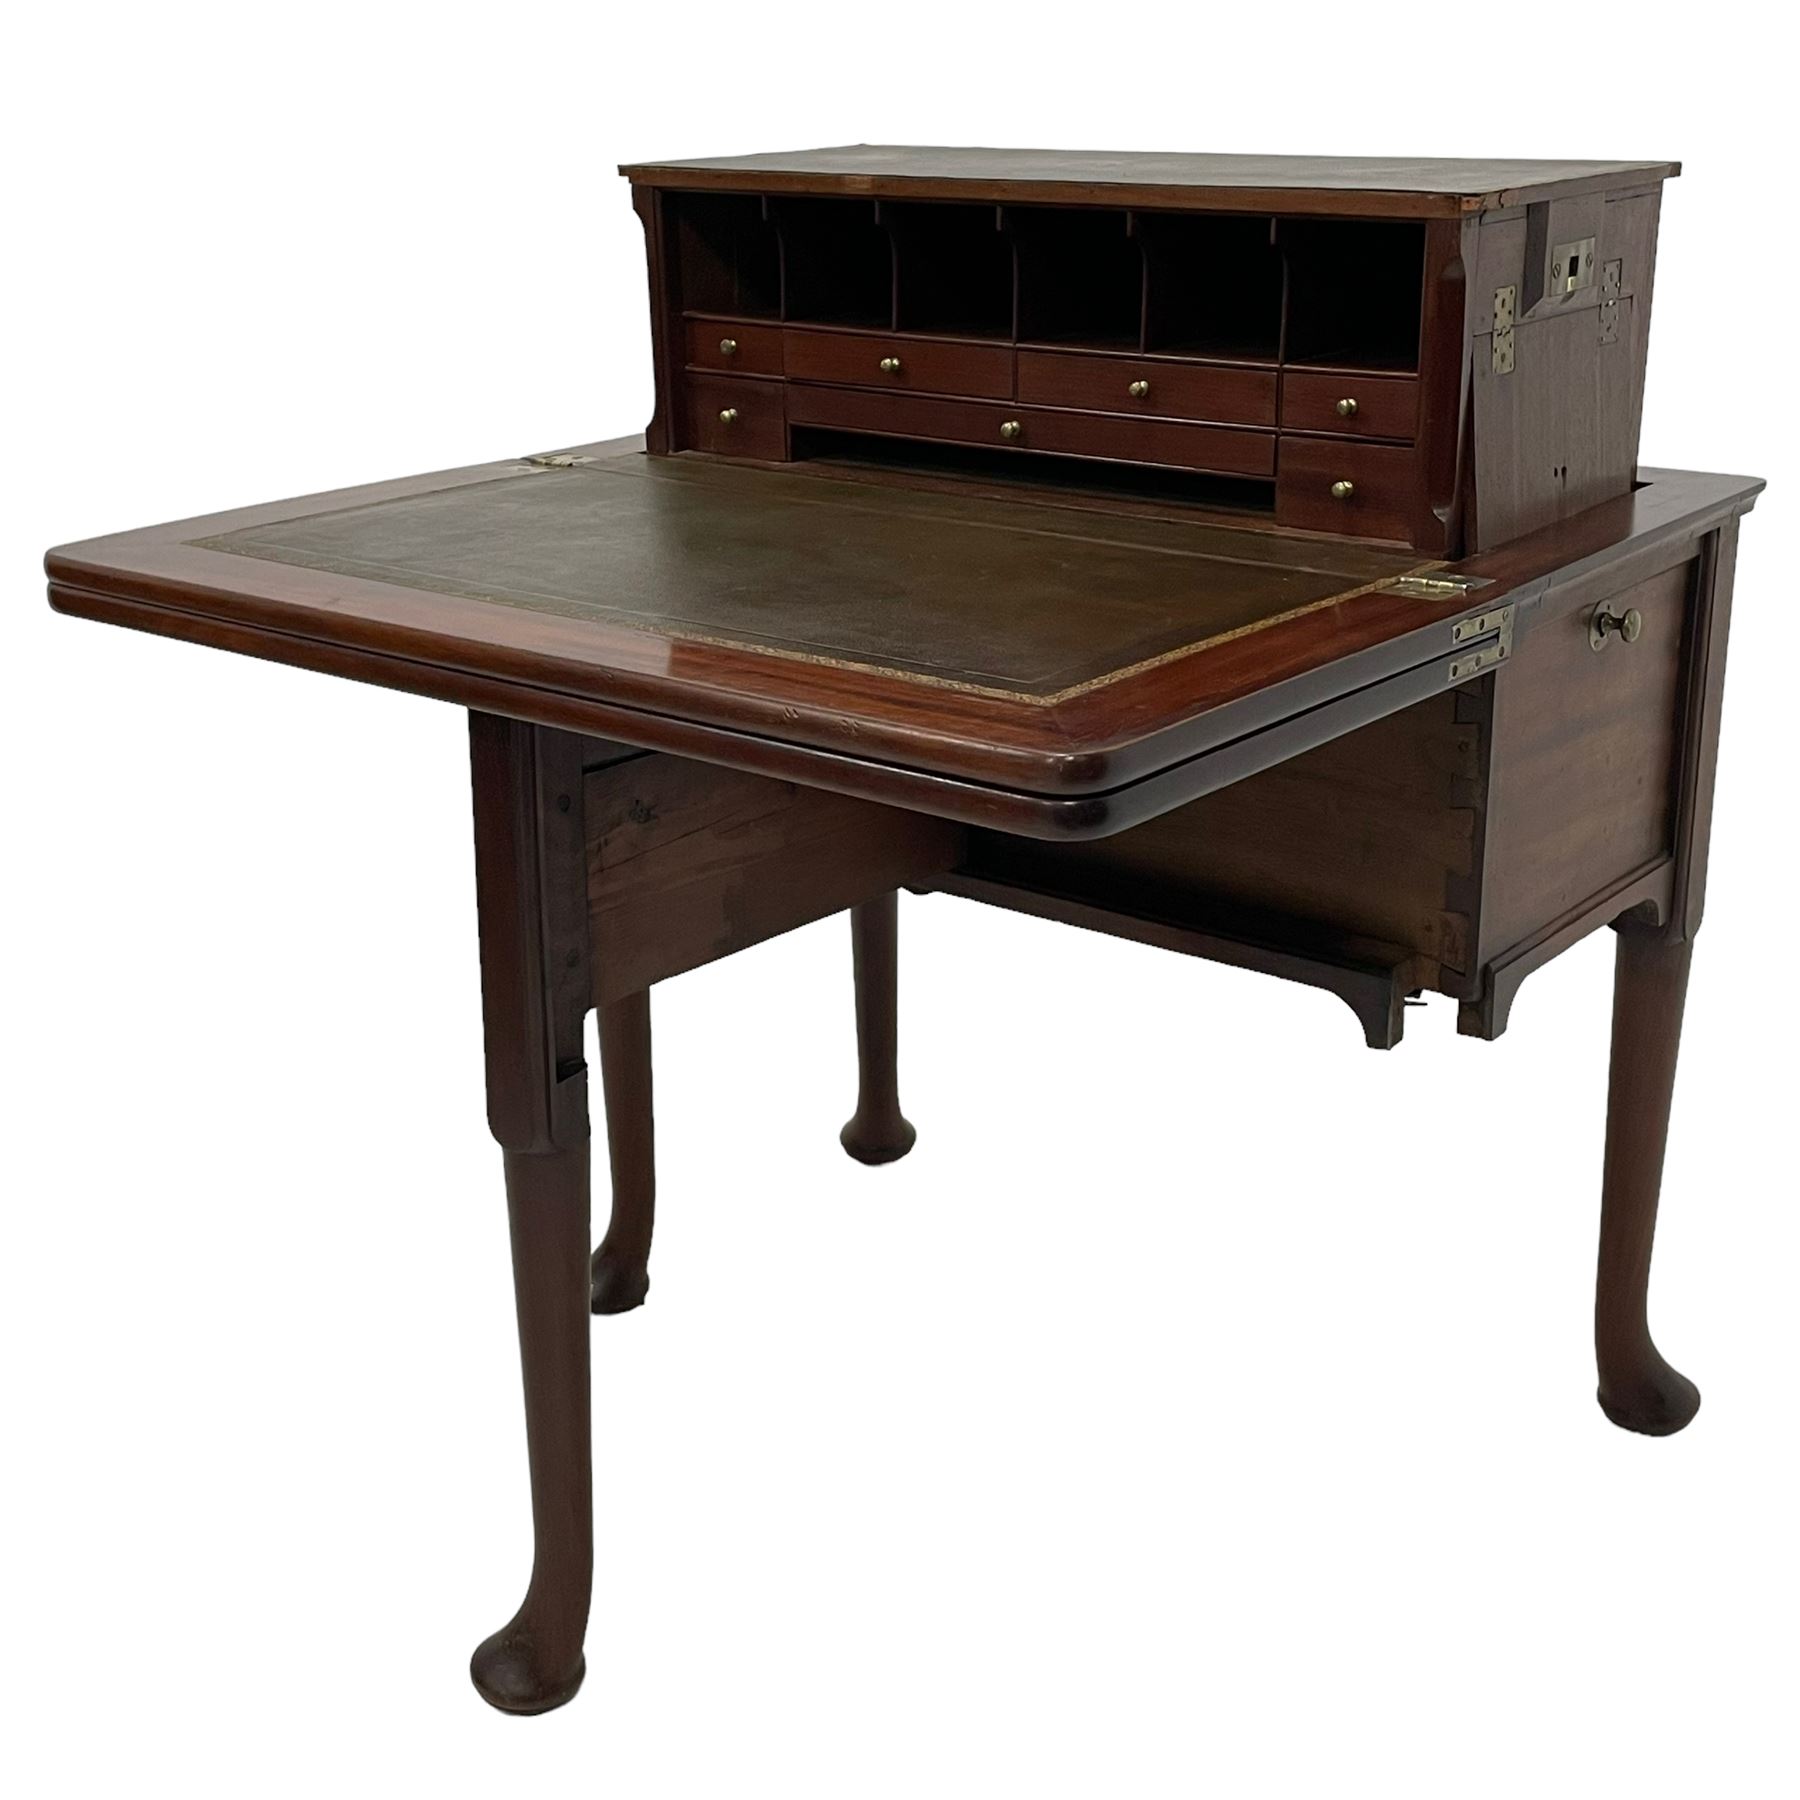 18th century mahogany metamorphic campaign writing desk - Image 21 of 27